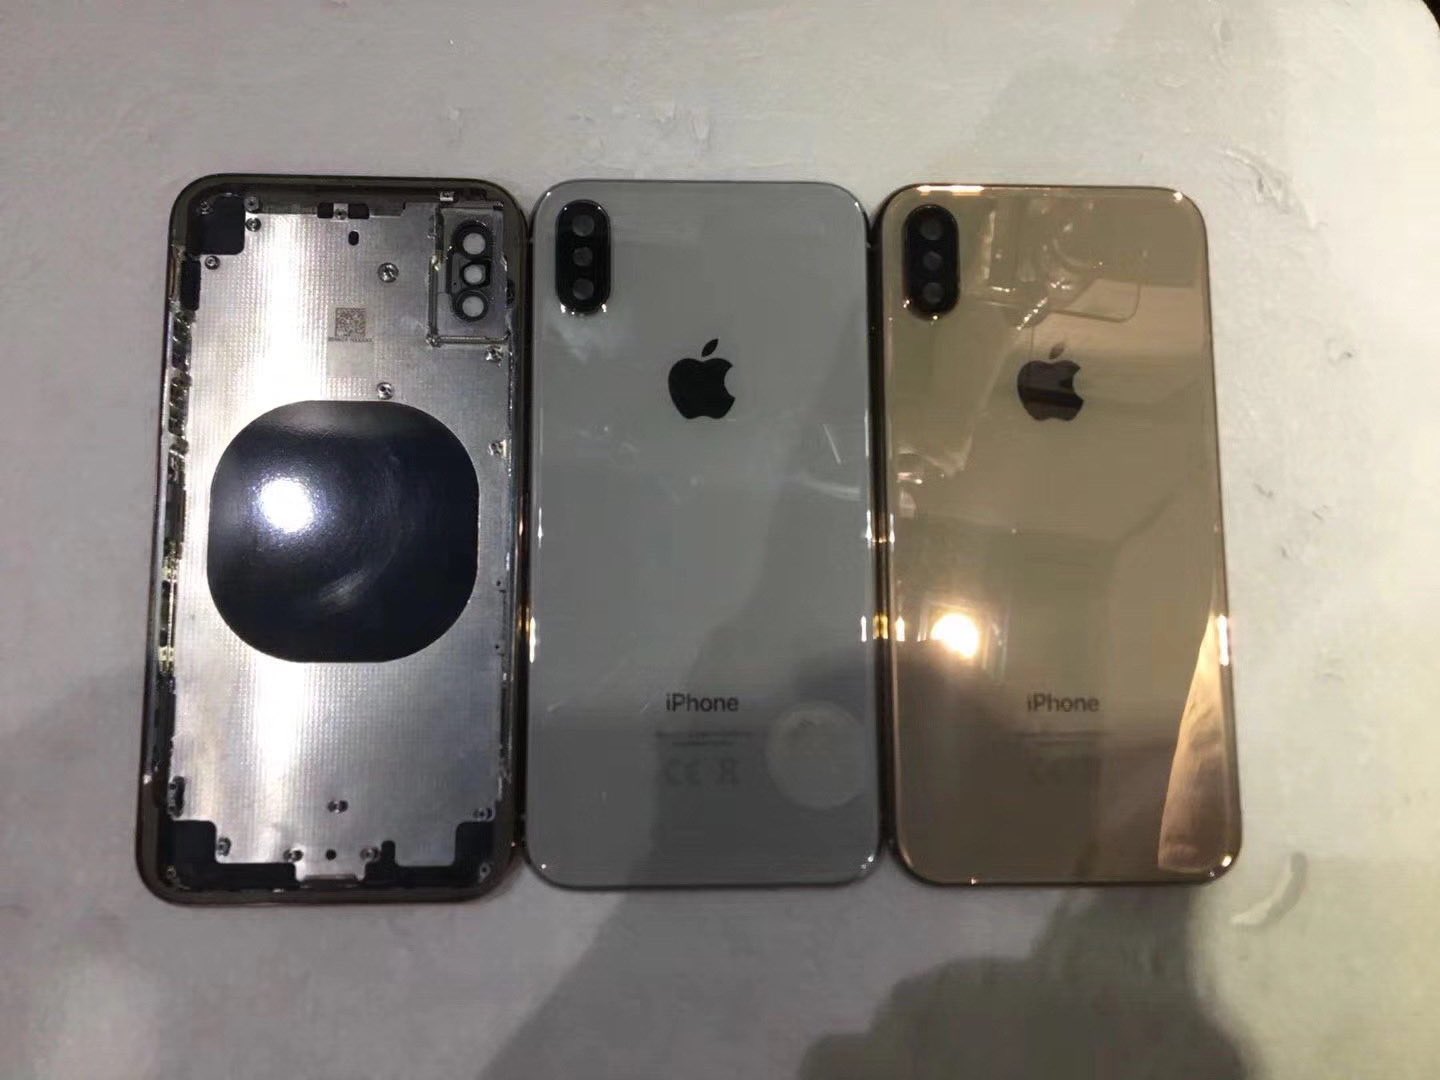 【UPDATE】｢iPhone X｣のゴールドモデルの実機写真??